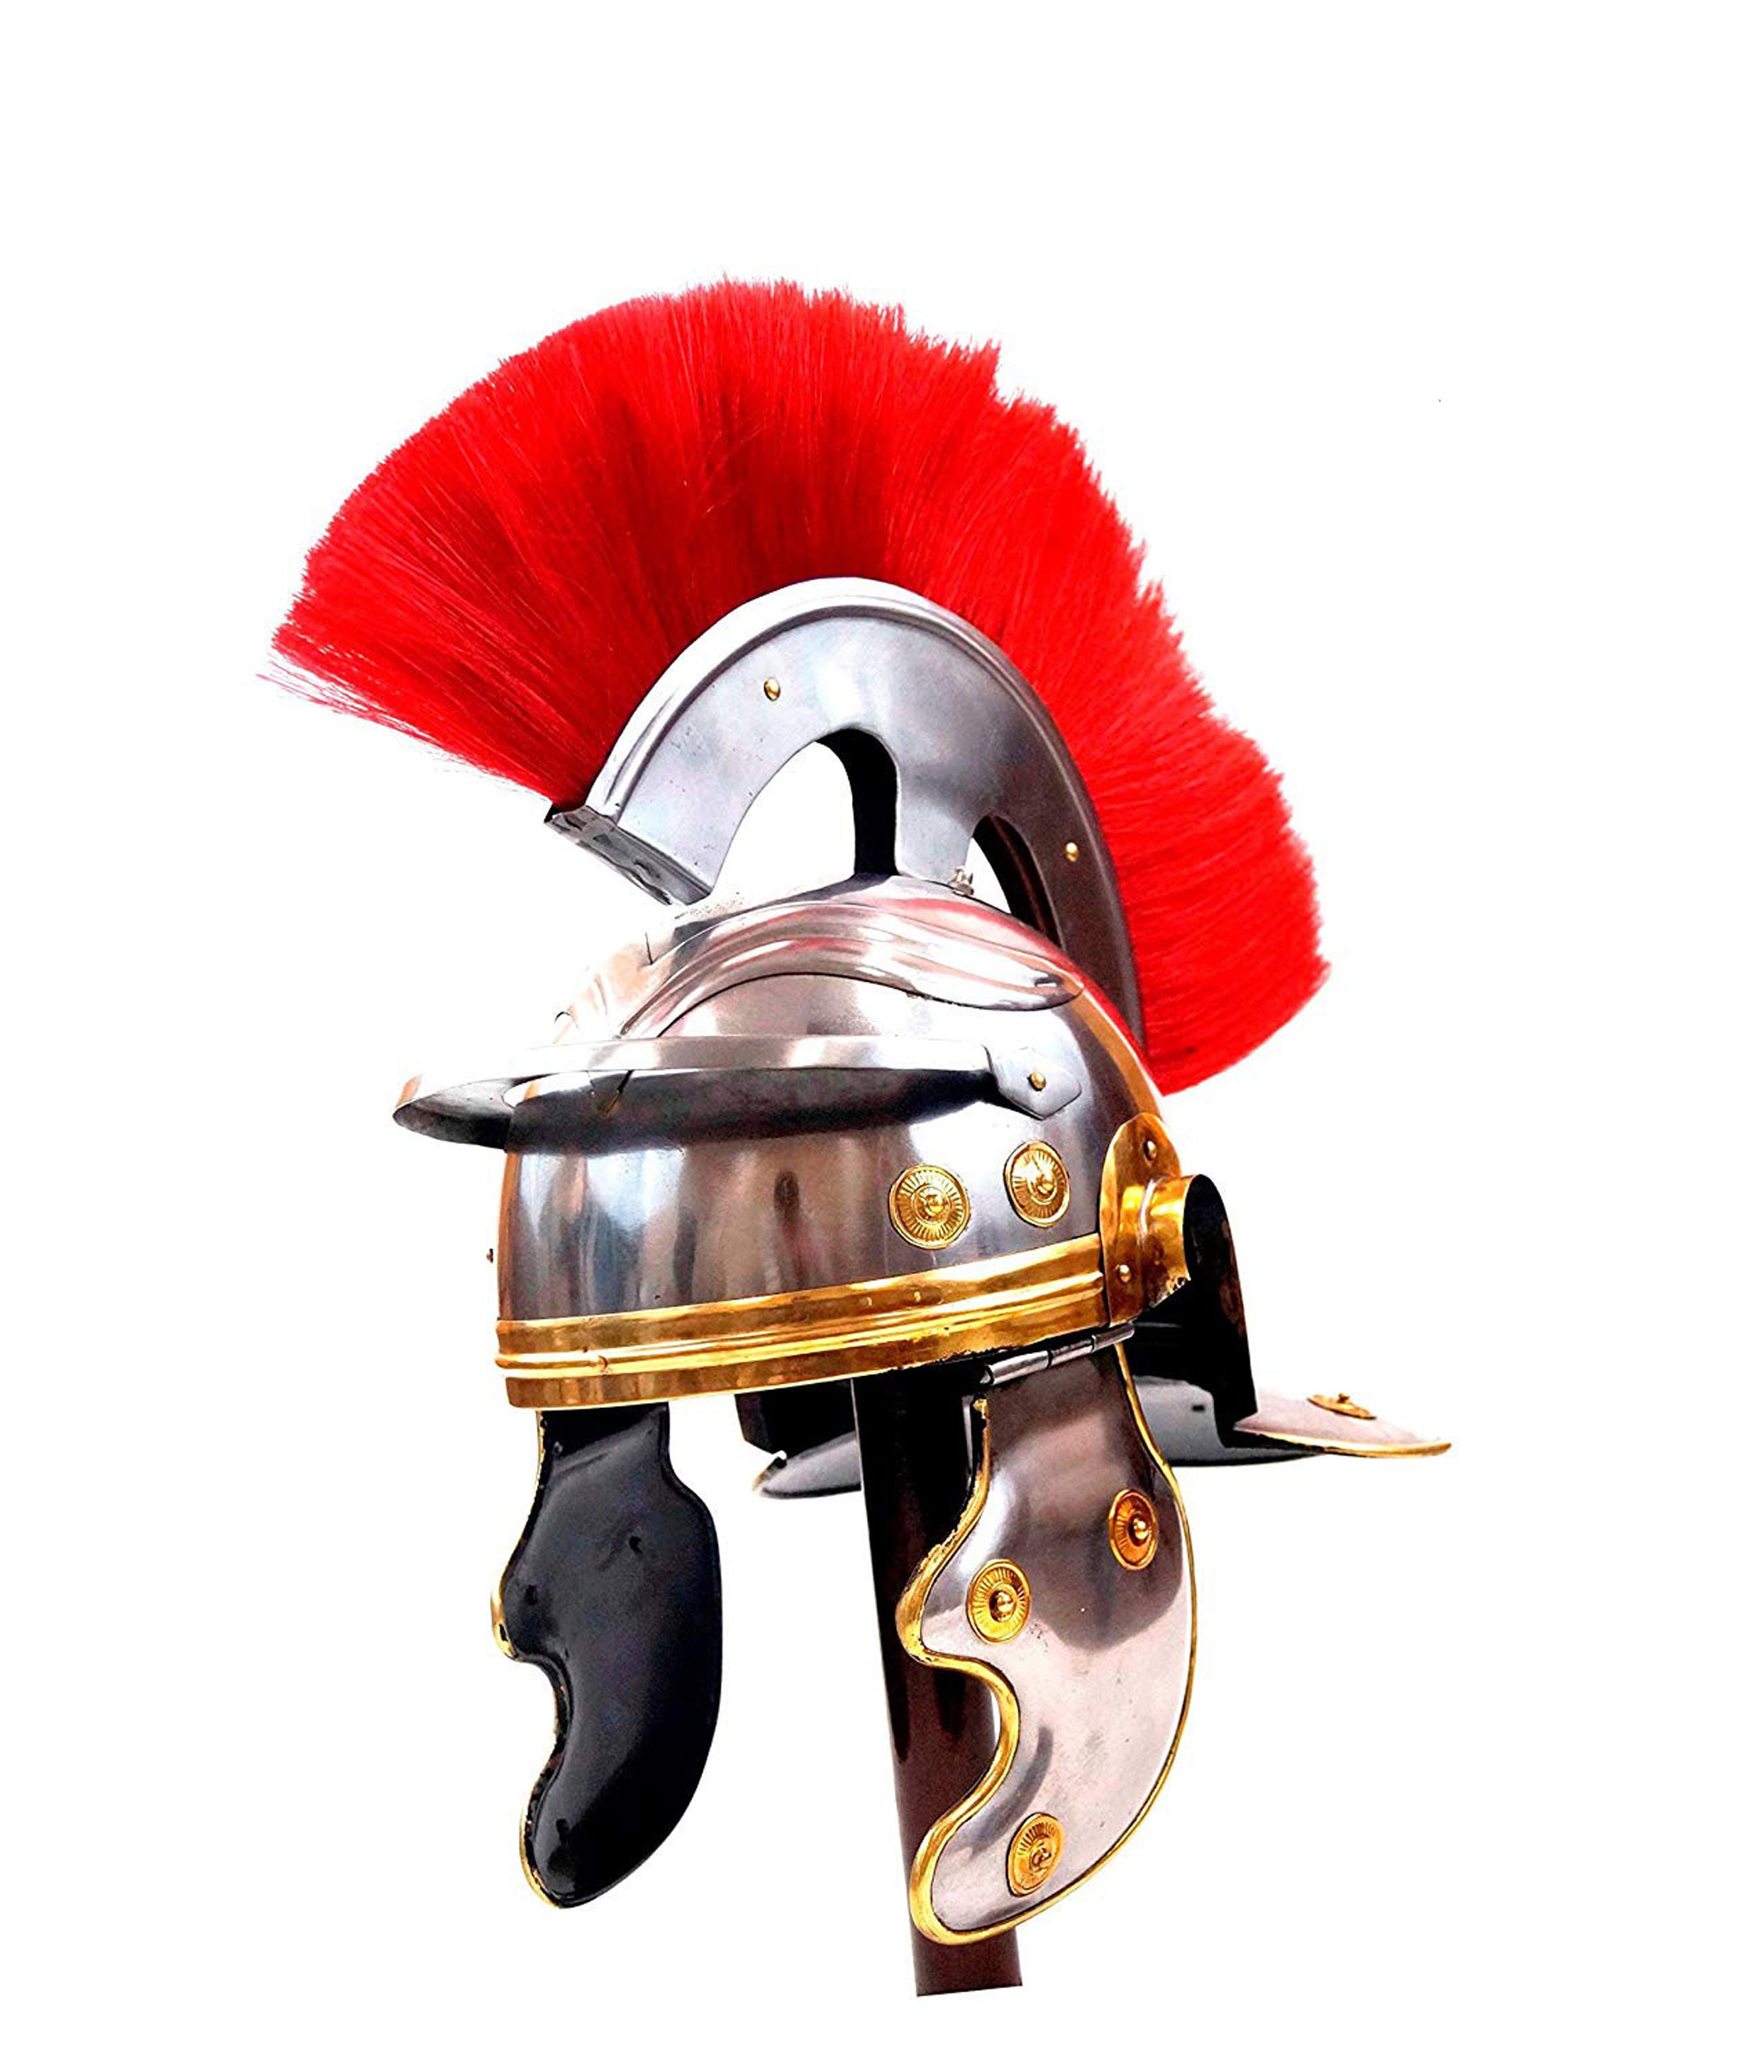 Details about   Roman Officer Centurion Historical Helmet Armor Red Plume Adult Size Medieval 